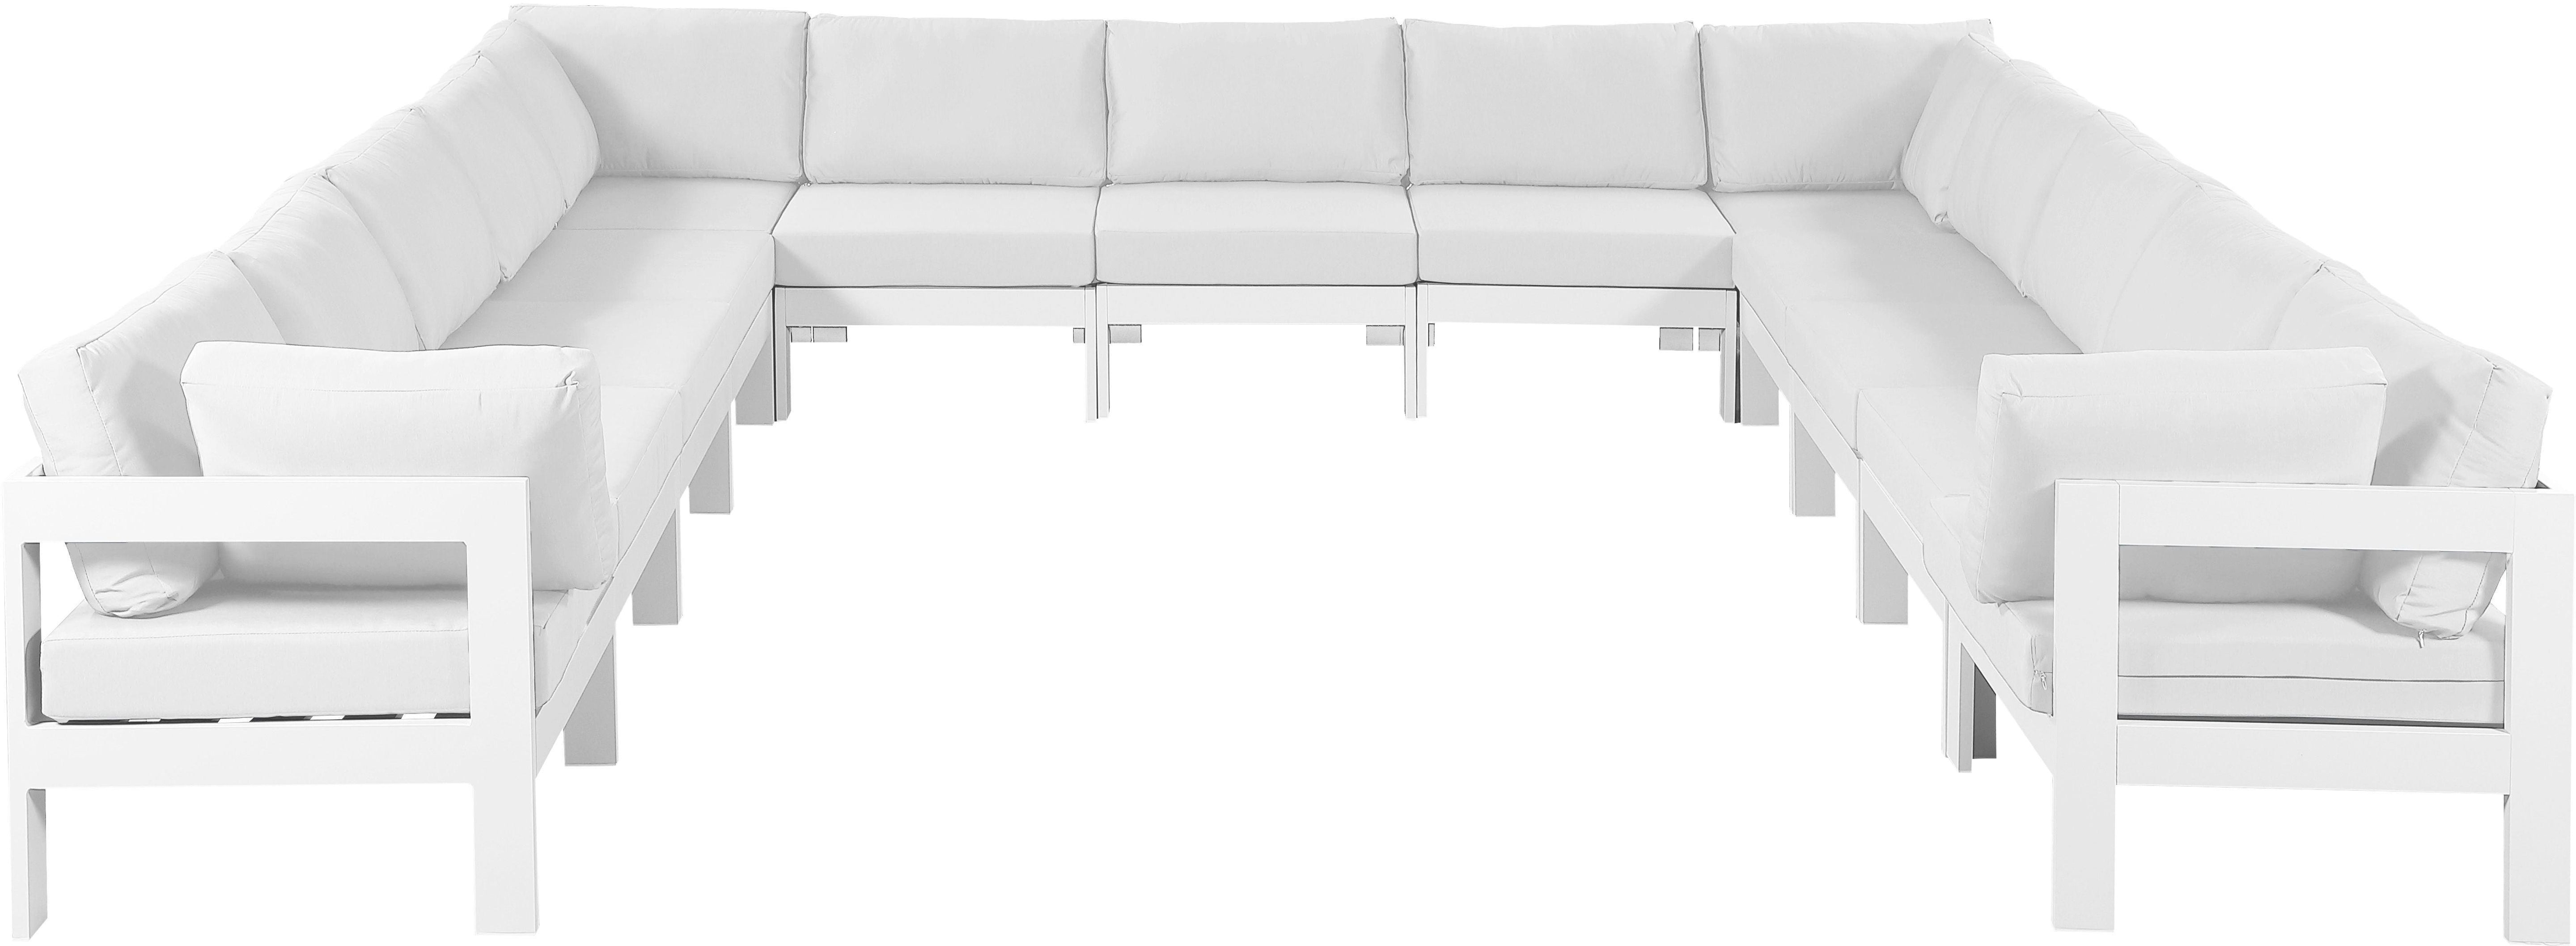 Meridian Furniture - Nizuc - Outdoor Patio Modular Sectional 13 Piece - White - Fabric - 5th Avenue Furniture